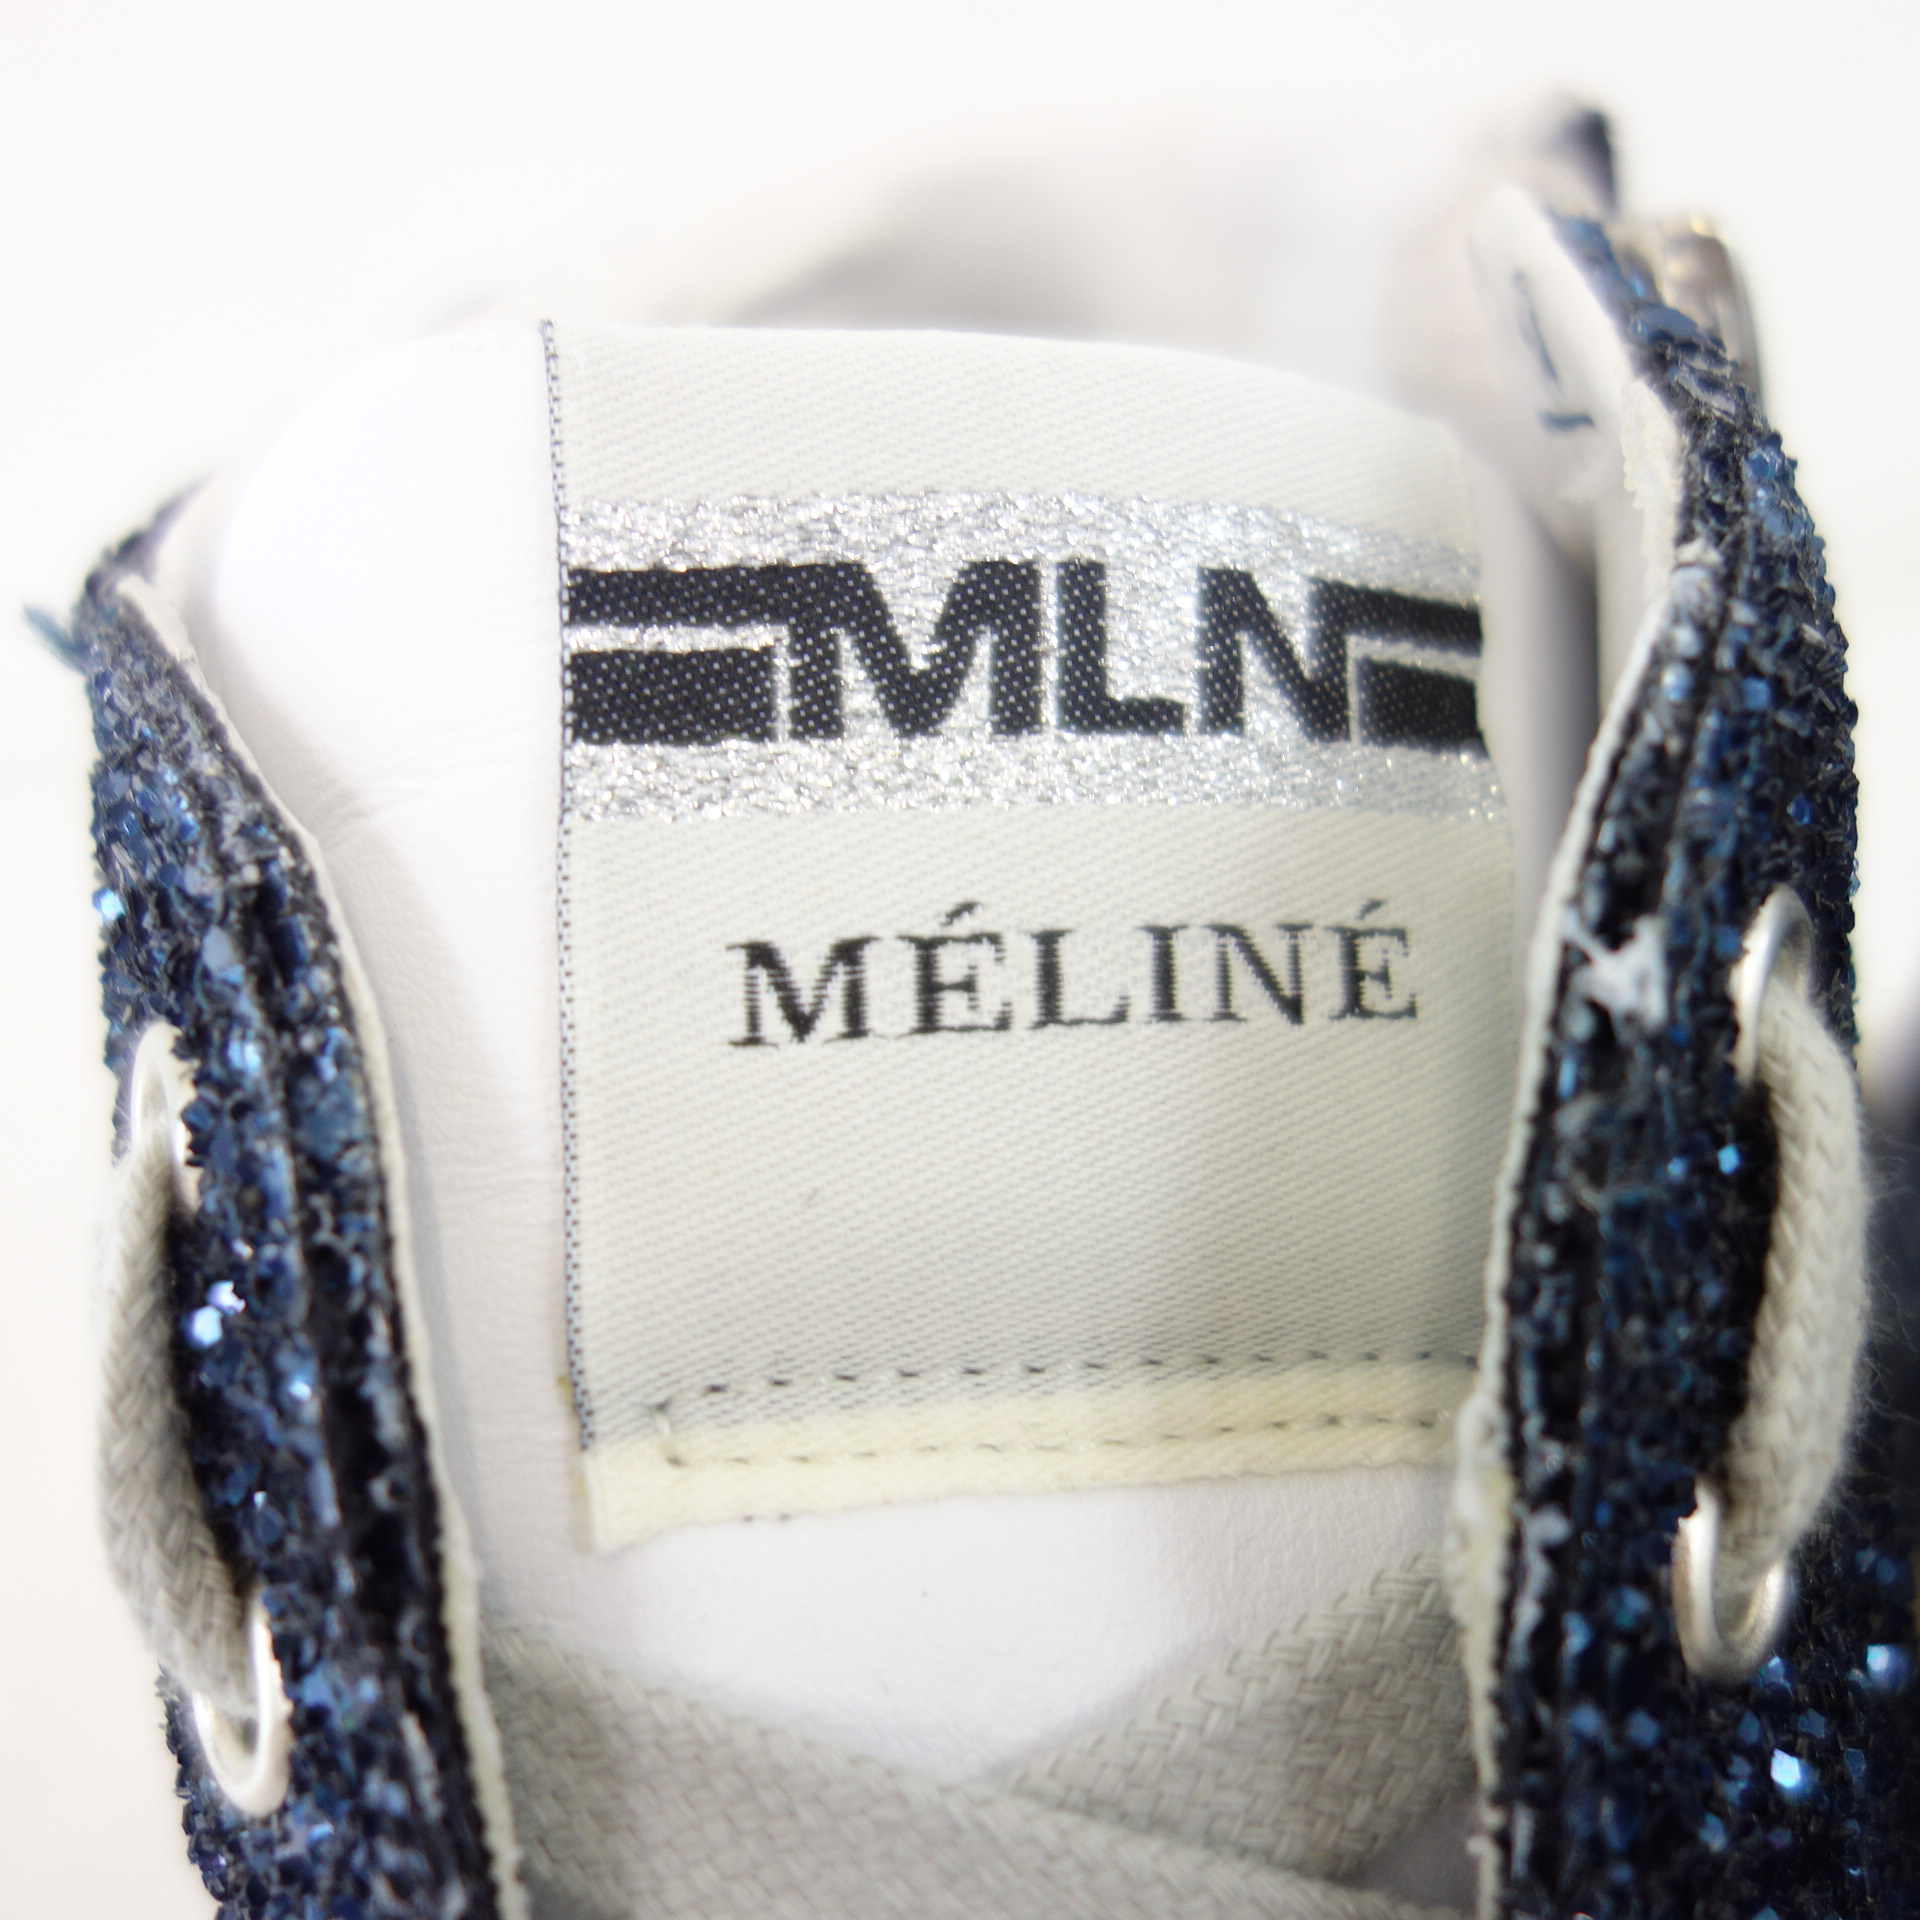 MELINE MLN Damen Sport Schuhe High Top Sneaker Glitzer Blau Leder Modell NKC 1369